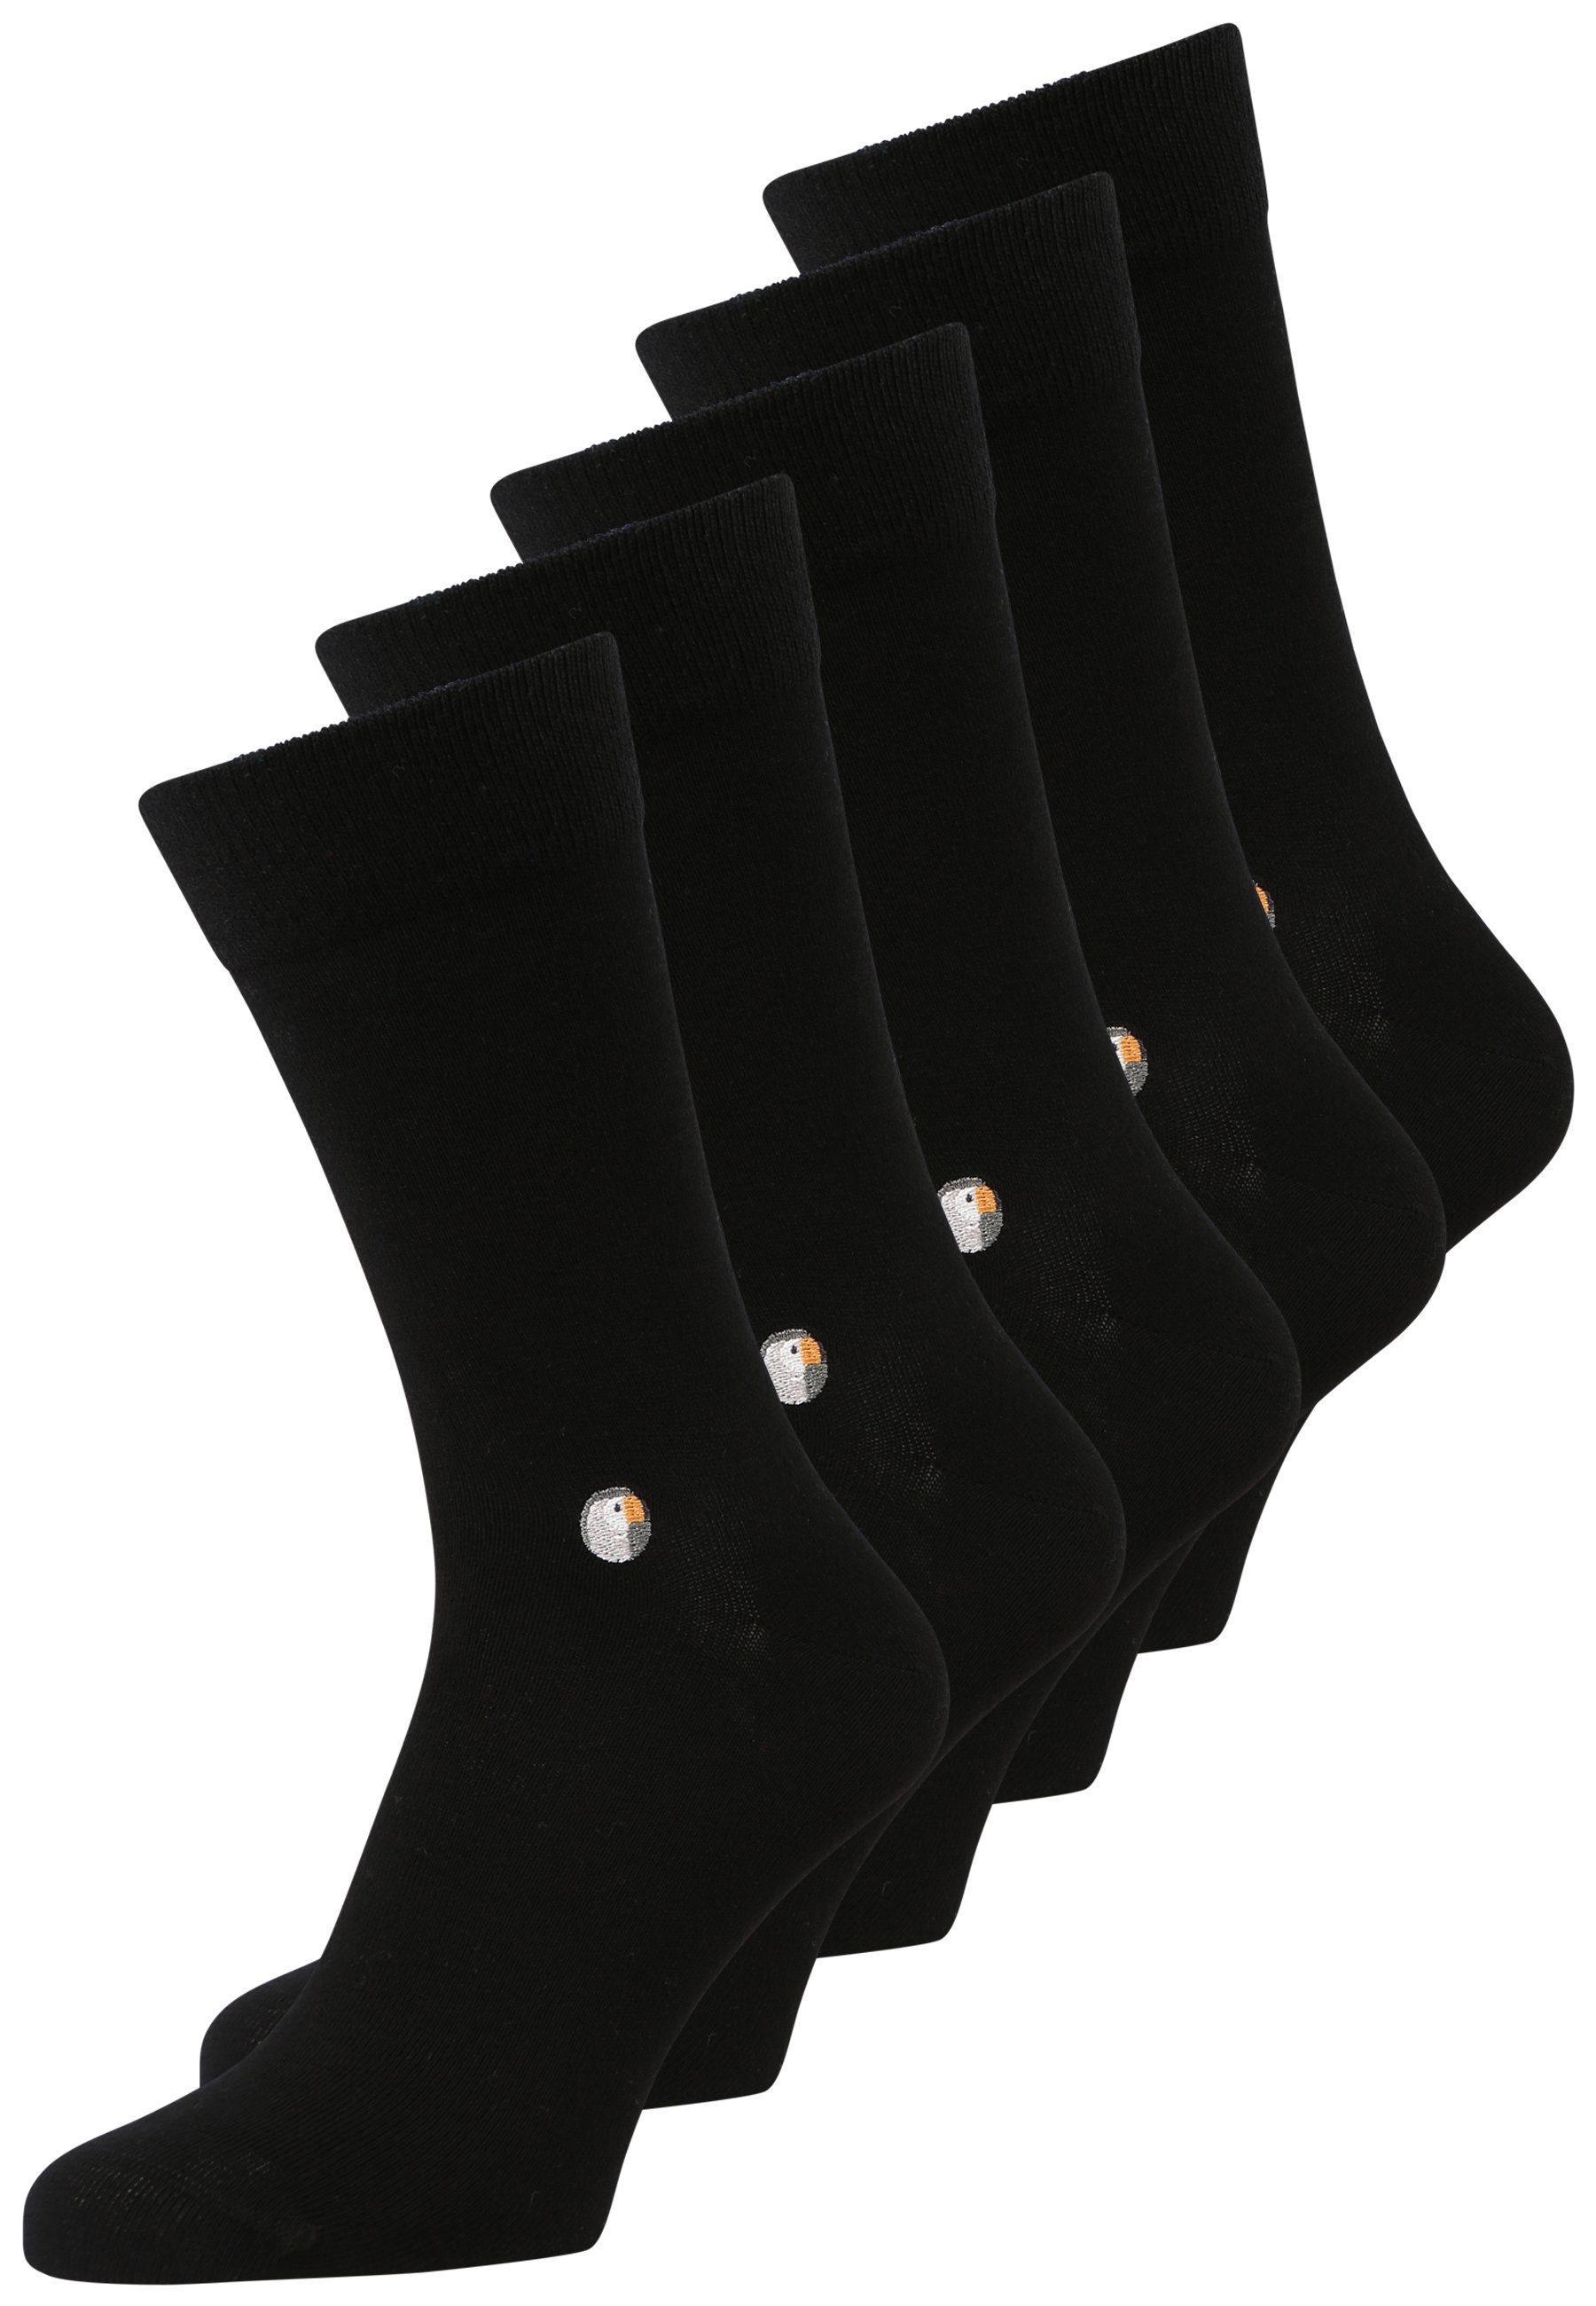 Sokid Socken Set 1 5er Pack (5-Paar) GOTS zertifizierte Bio-Baumwolle